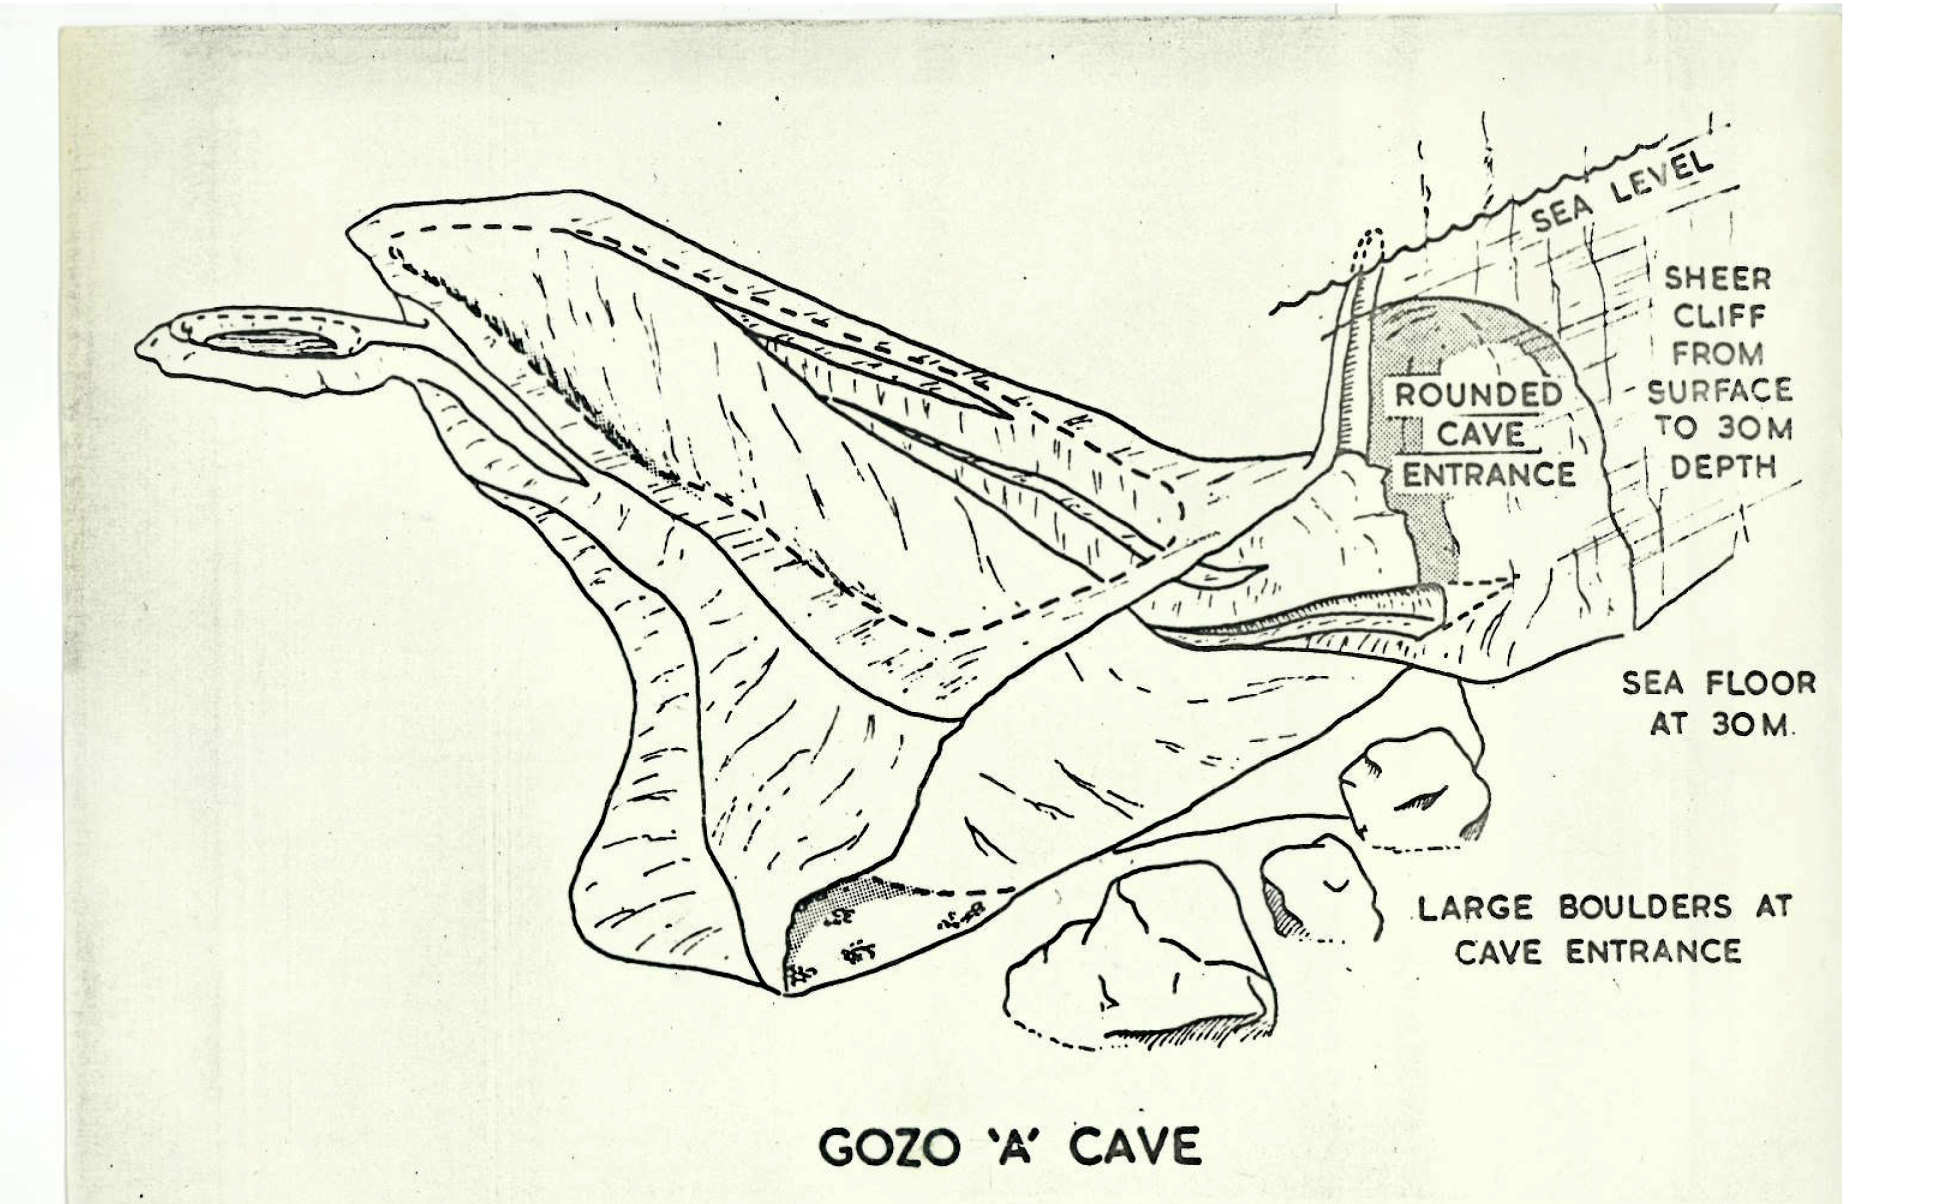 Gozo 'A' cave